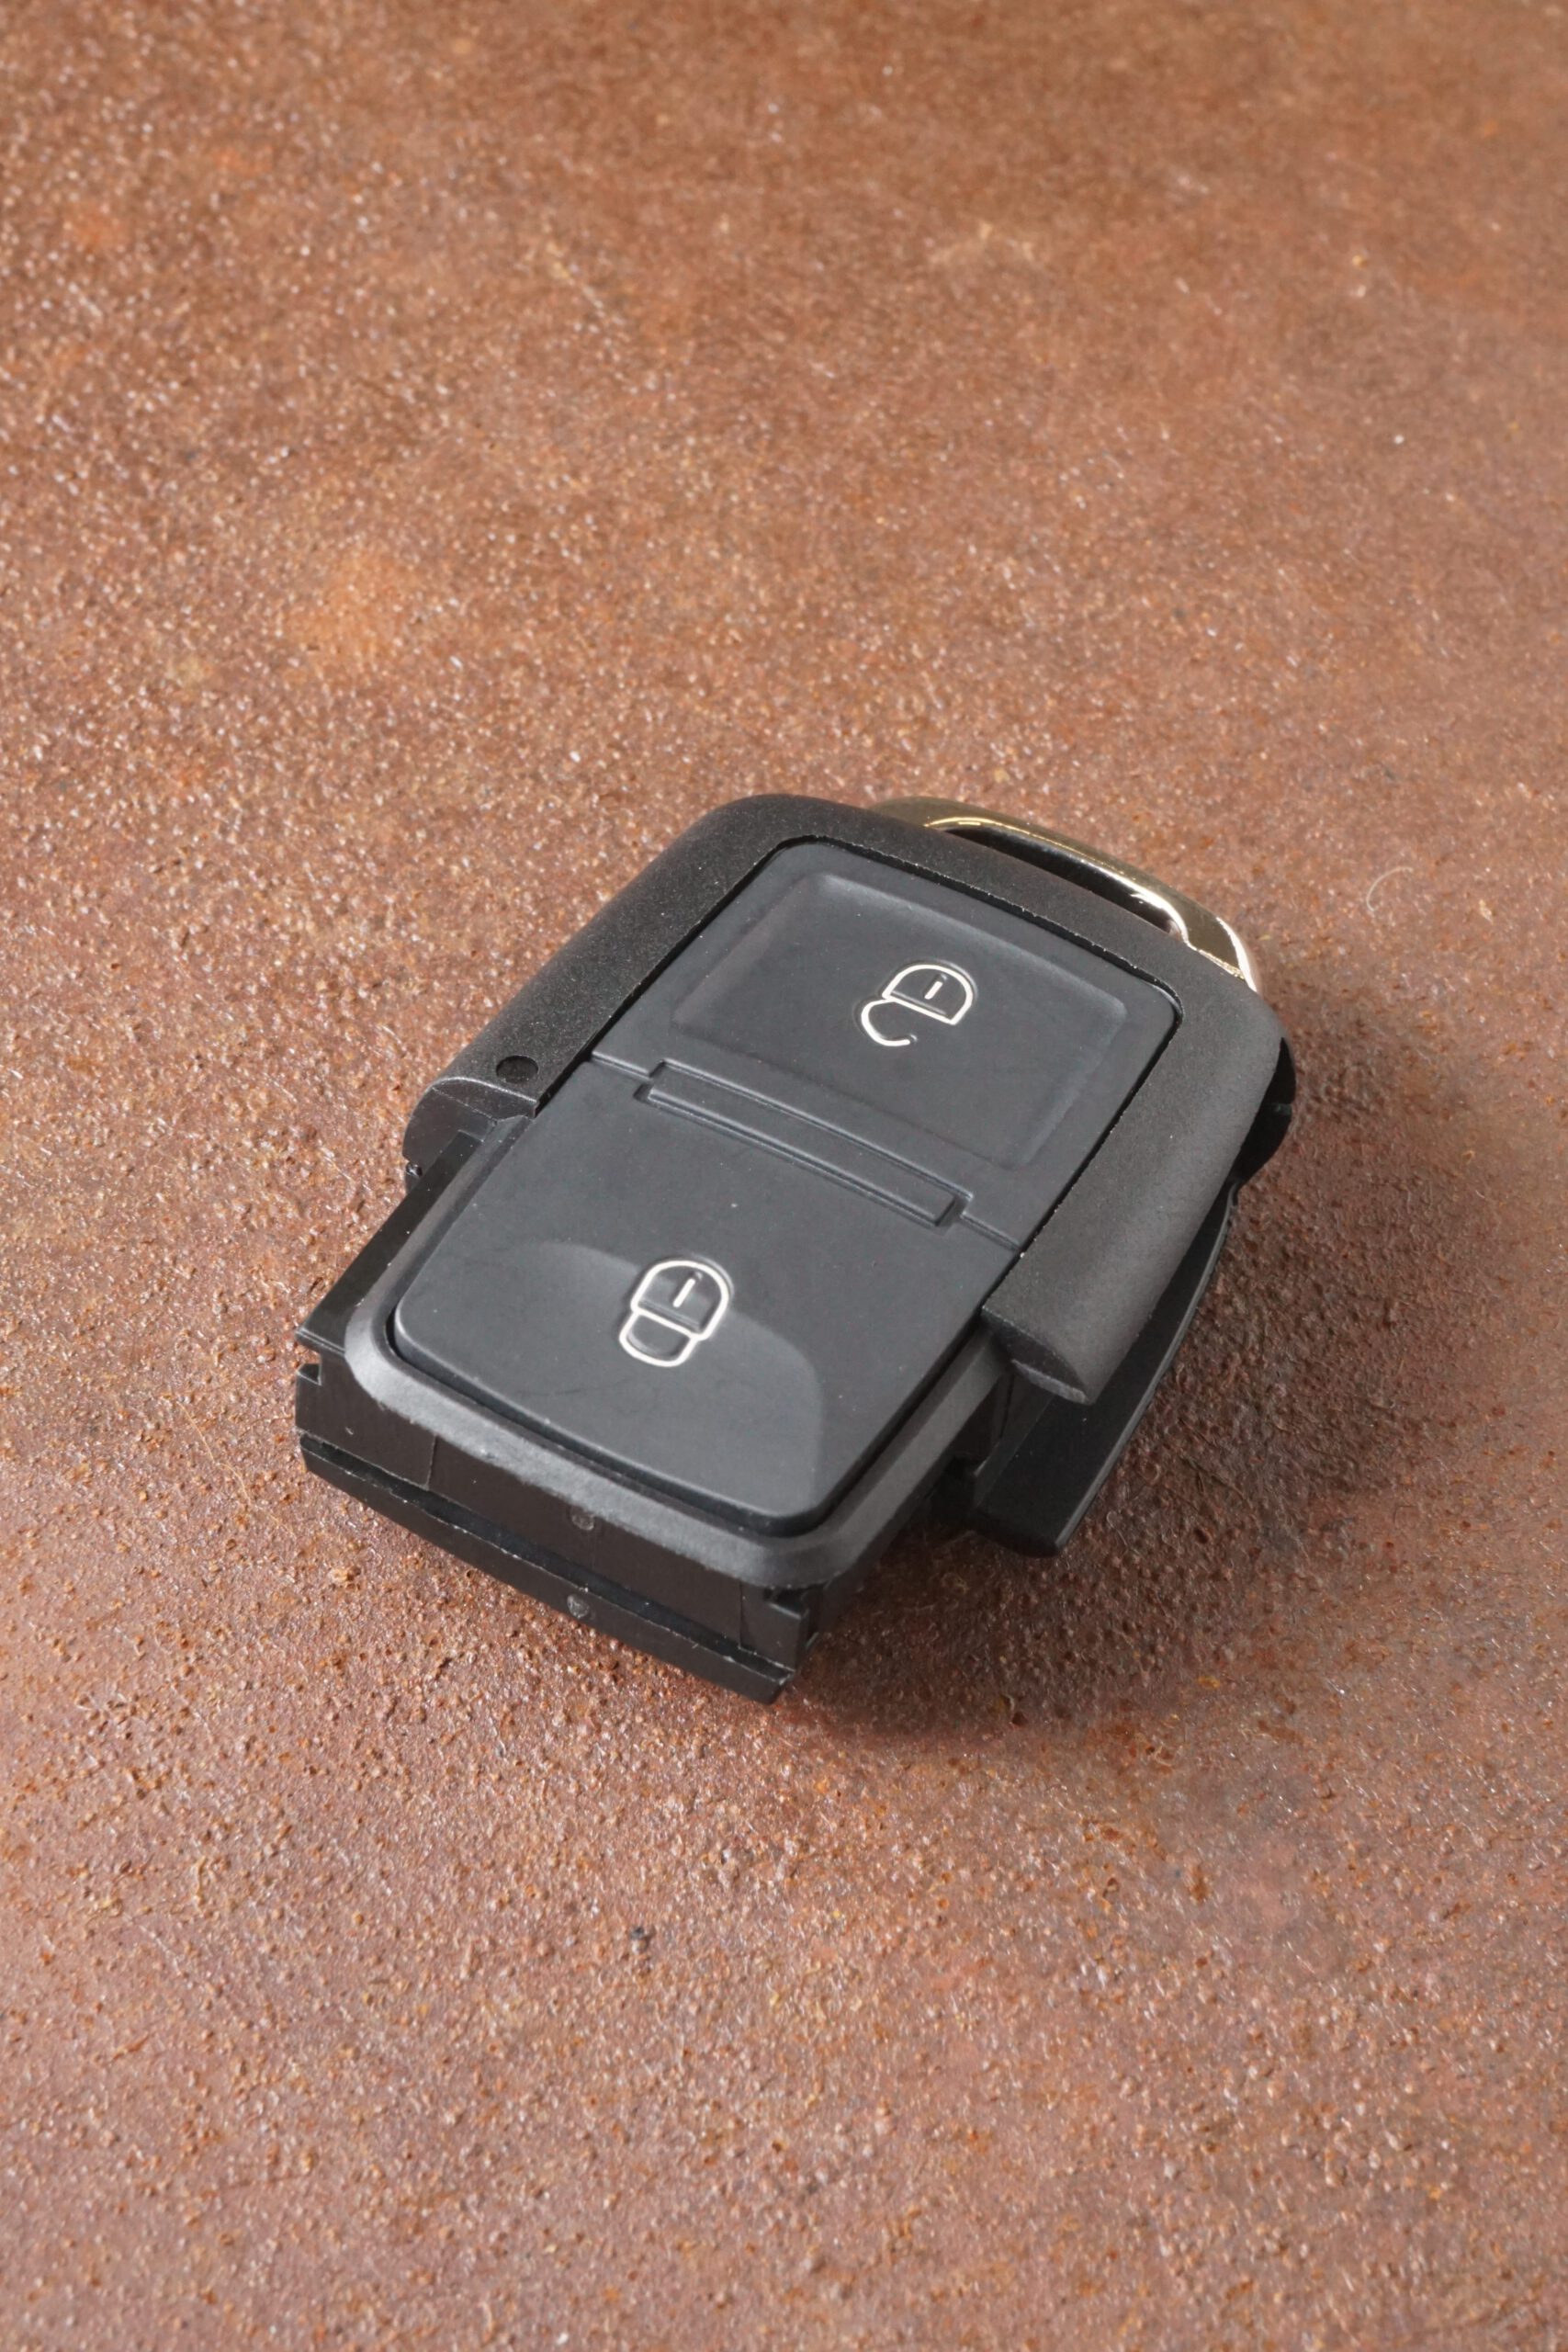 Mini Schlüssel Gehäuse - Autoschlüssel Ersatz Gehäuse - Autoschlüssel